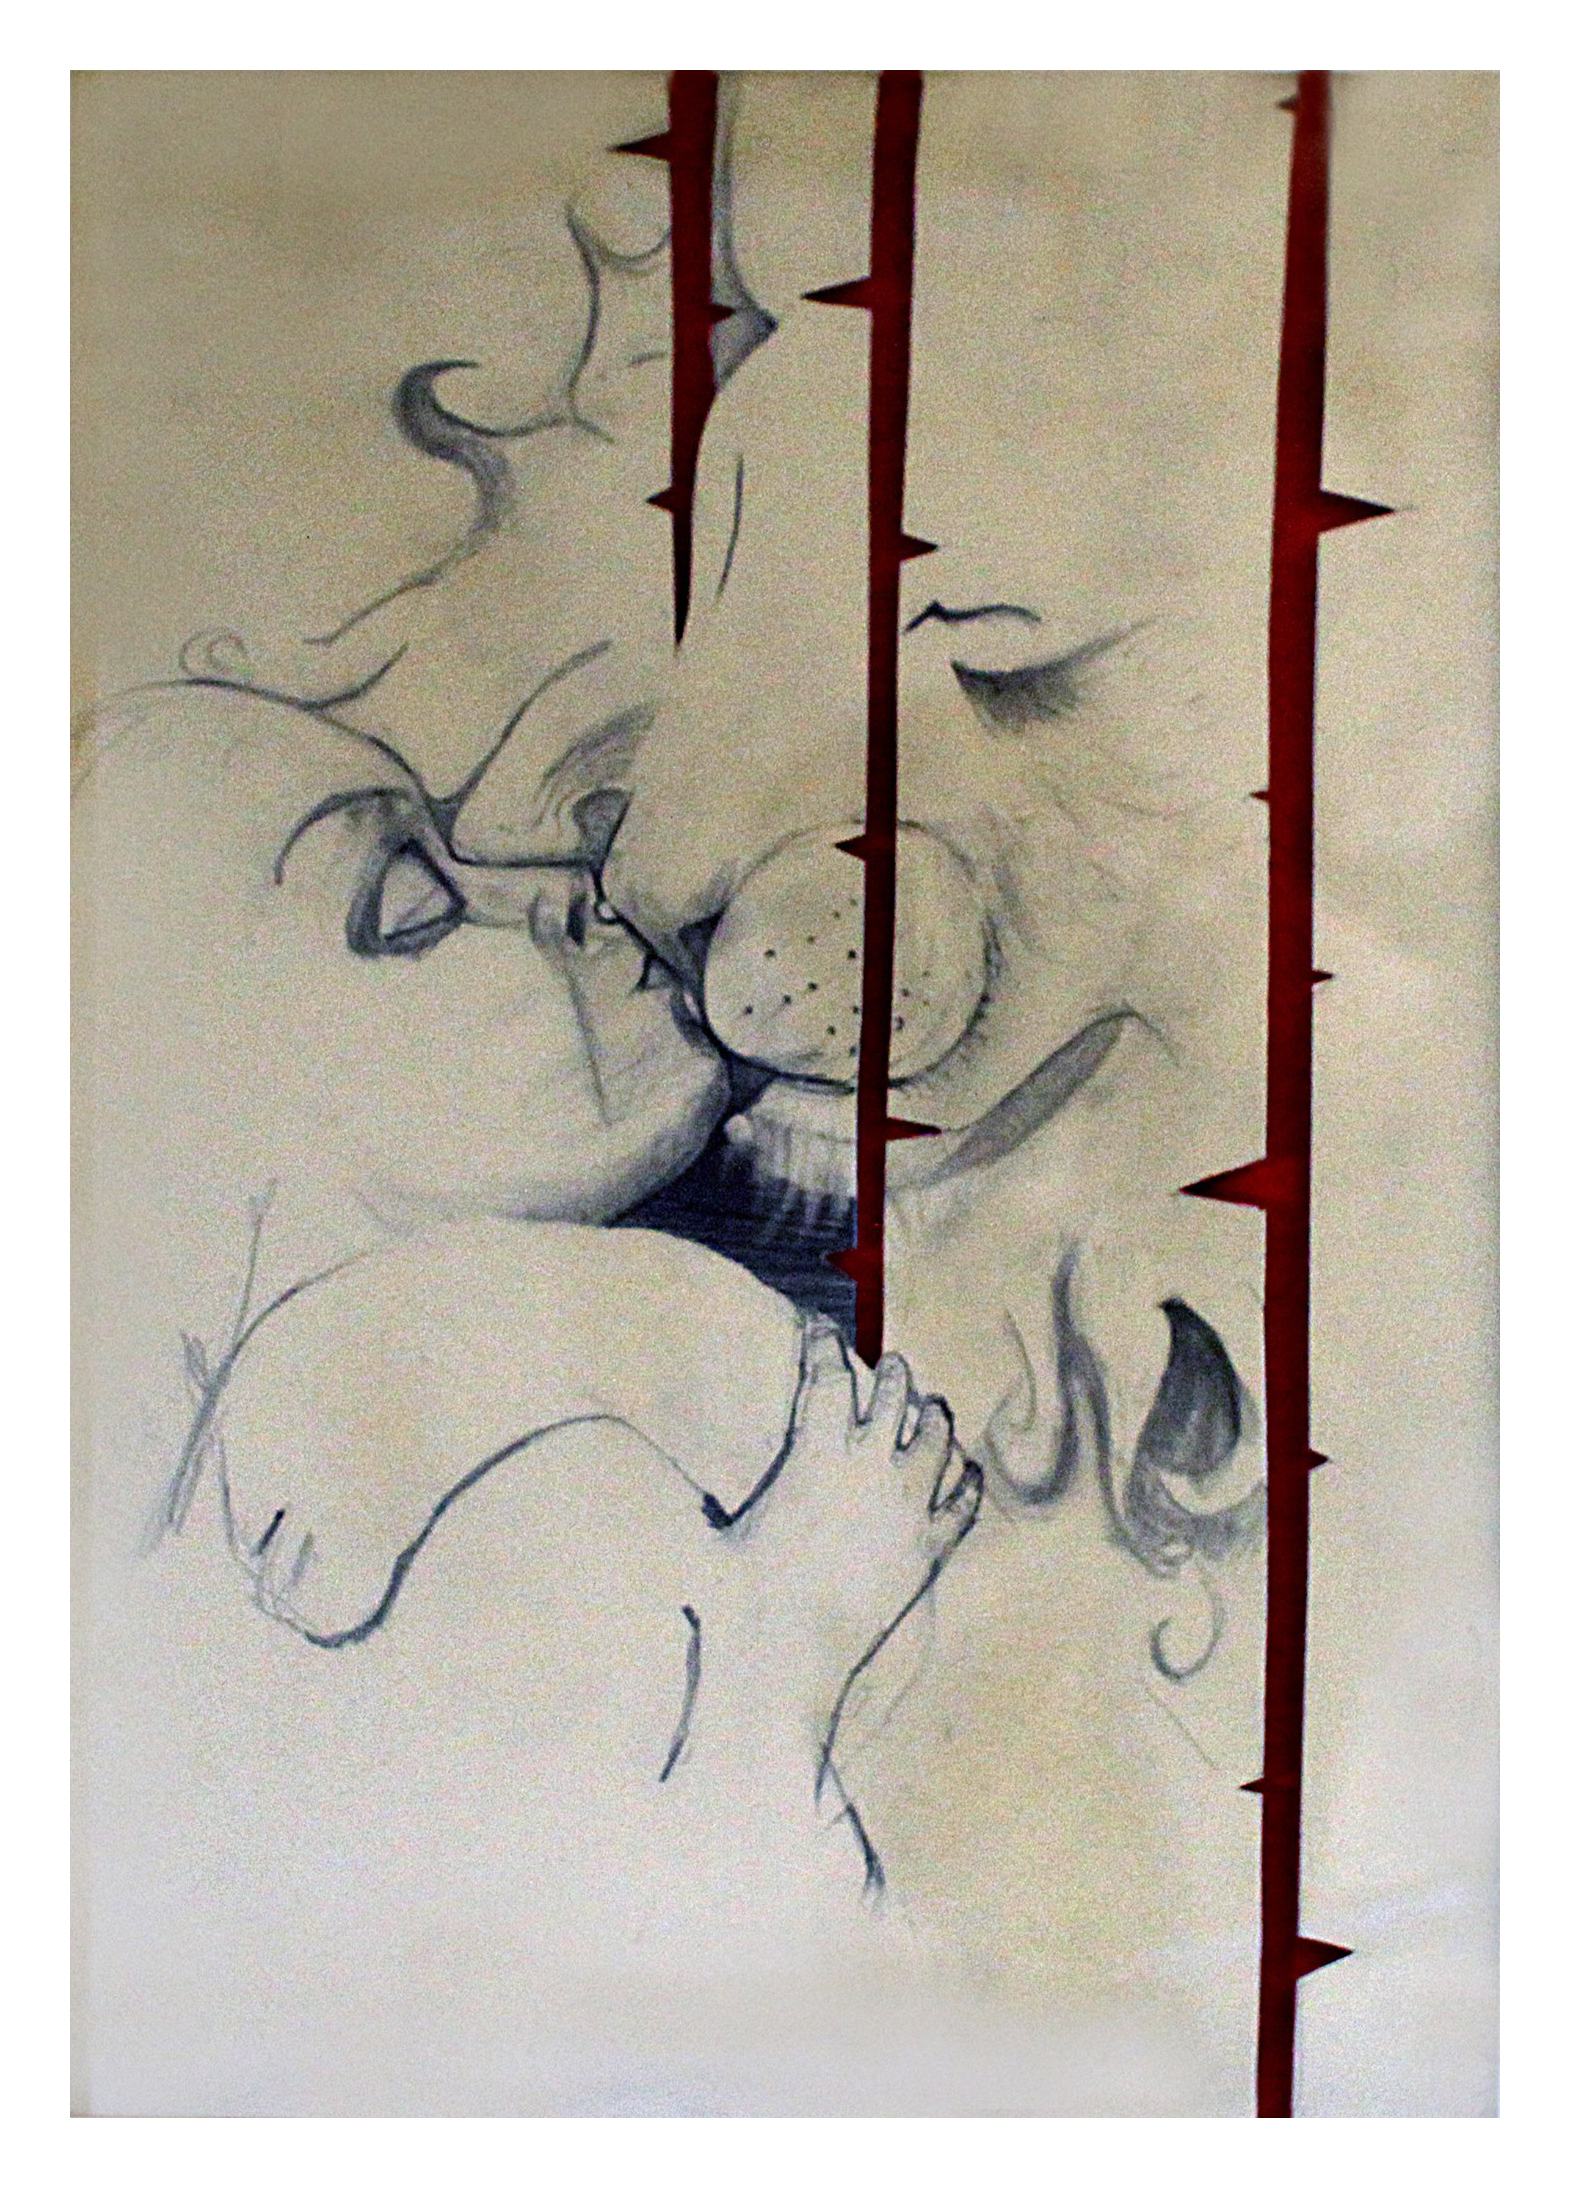 Buren/buren, blyerts, collage, 29 x32 cm